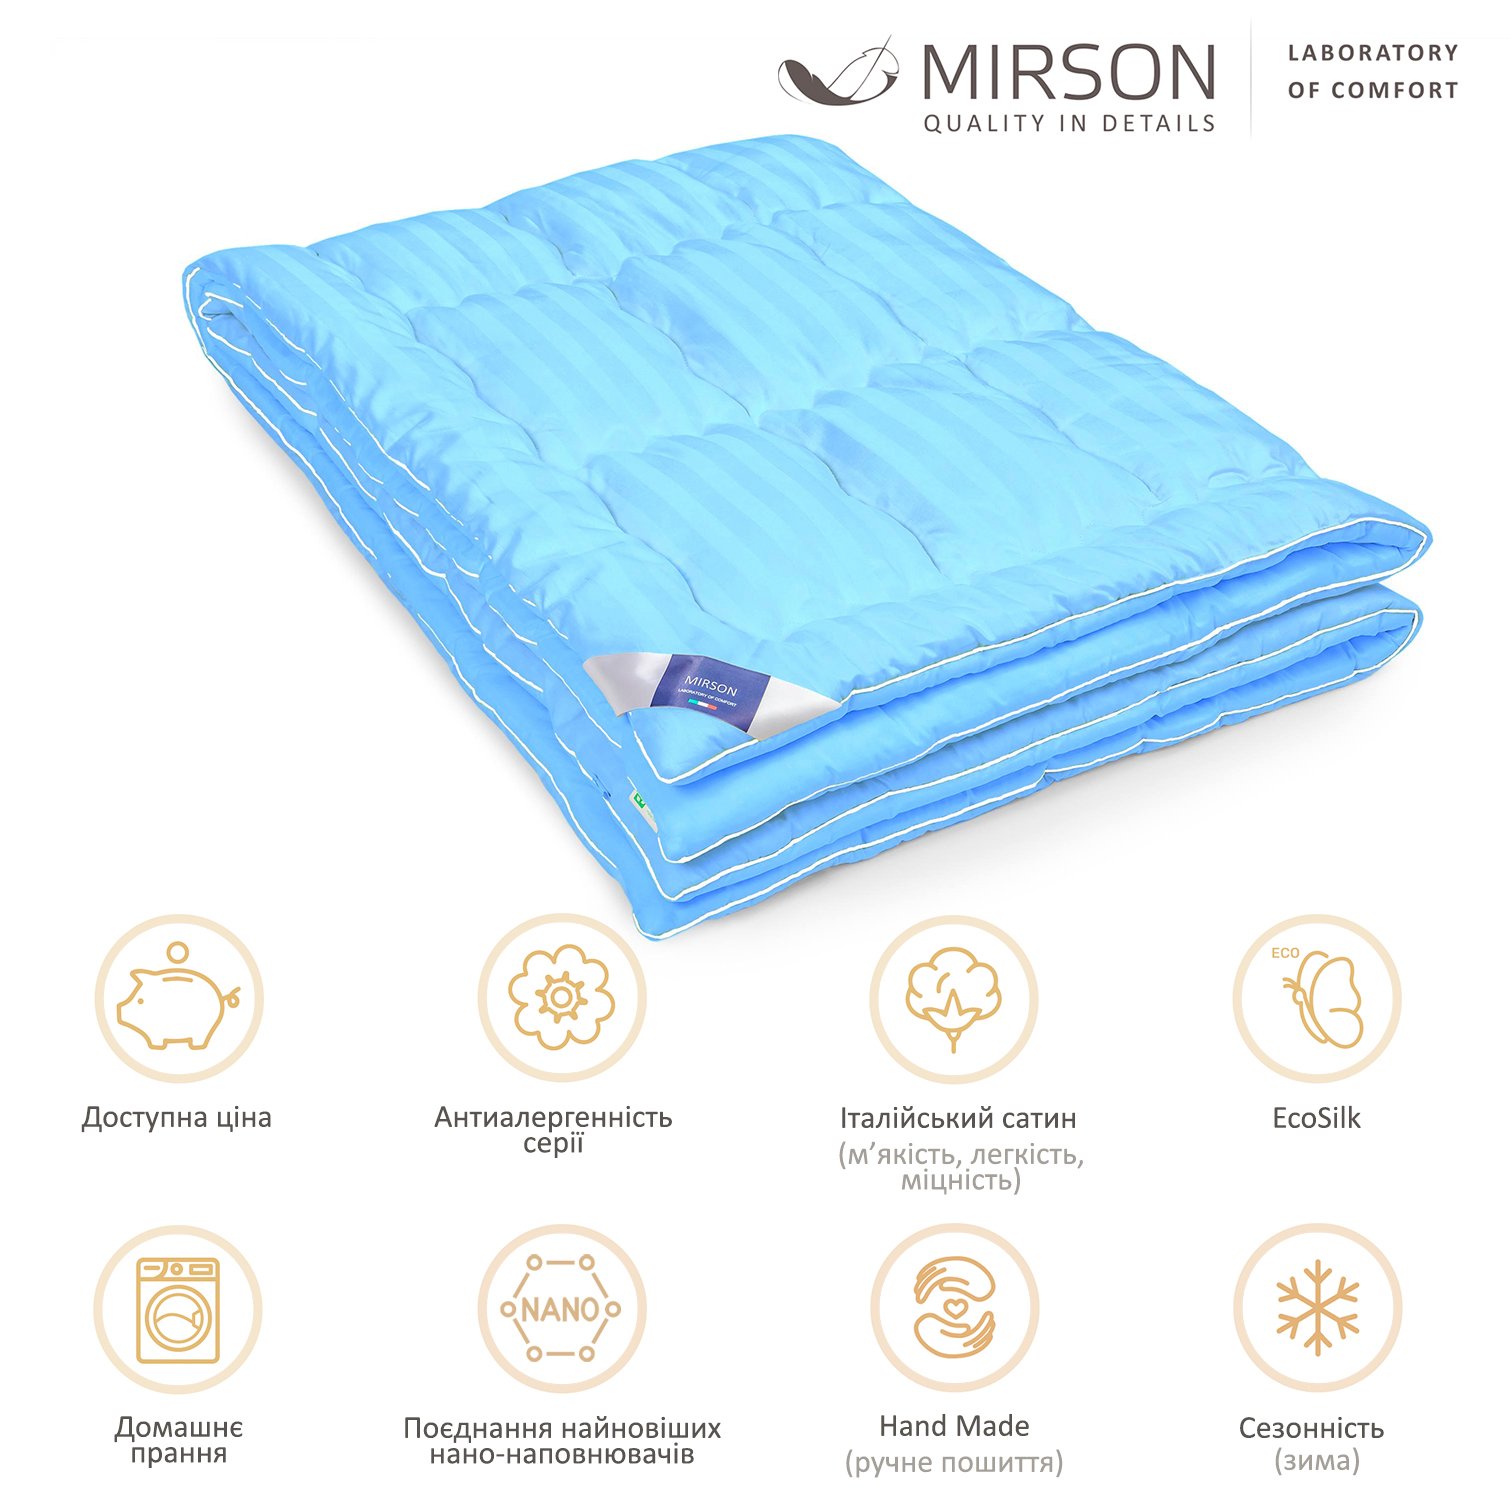 Одеяло антиаллергенное MirSon Valentino Premium Hand Made №067, зимнее, 220x240 см, голубое - фото 5